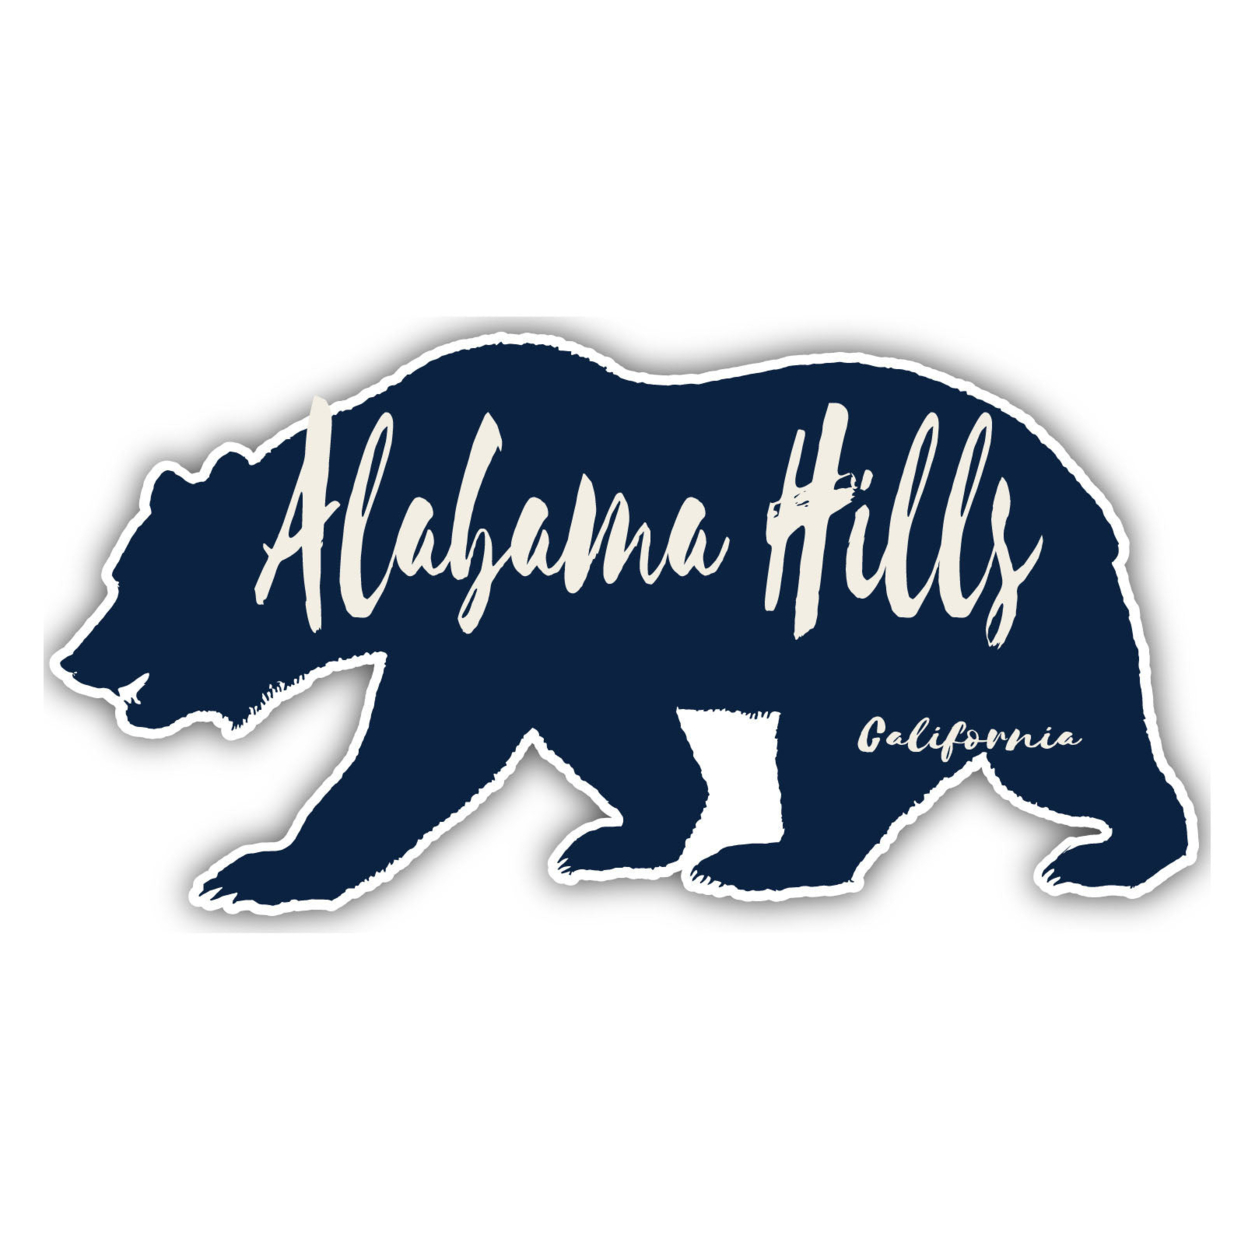 Alabama Hills California Souvenir Decorative Stickers (Choose Theme And Size) - 4-Pack, 8-Inch, Bear